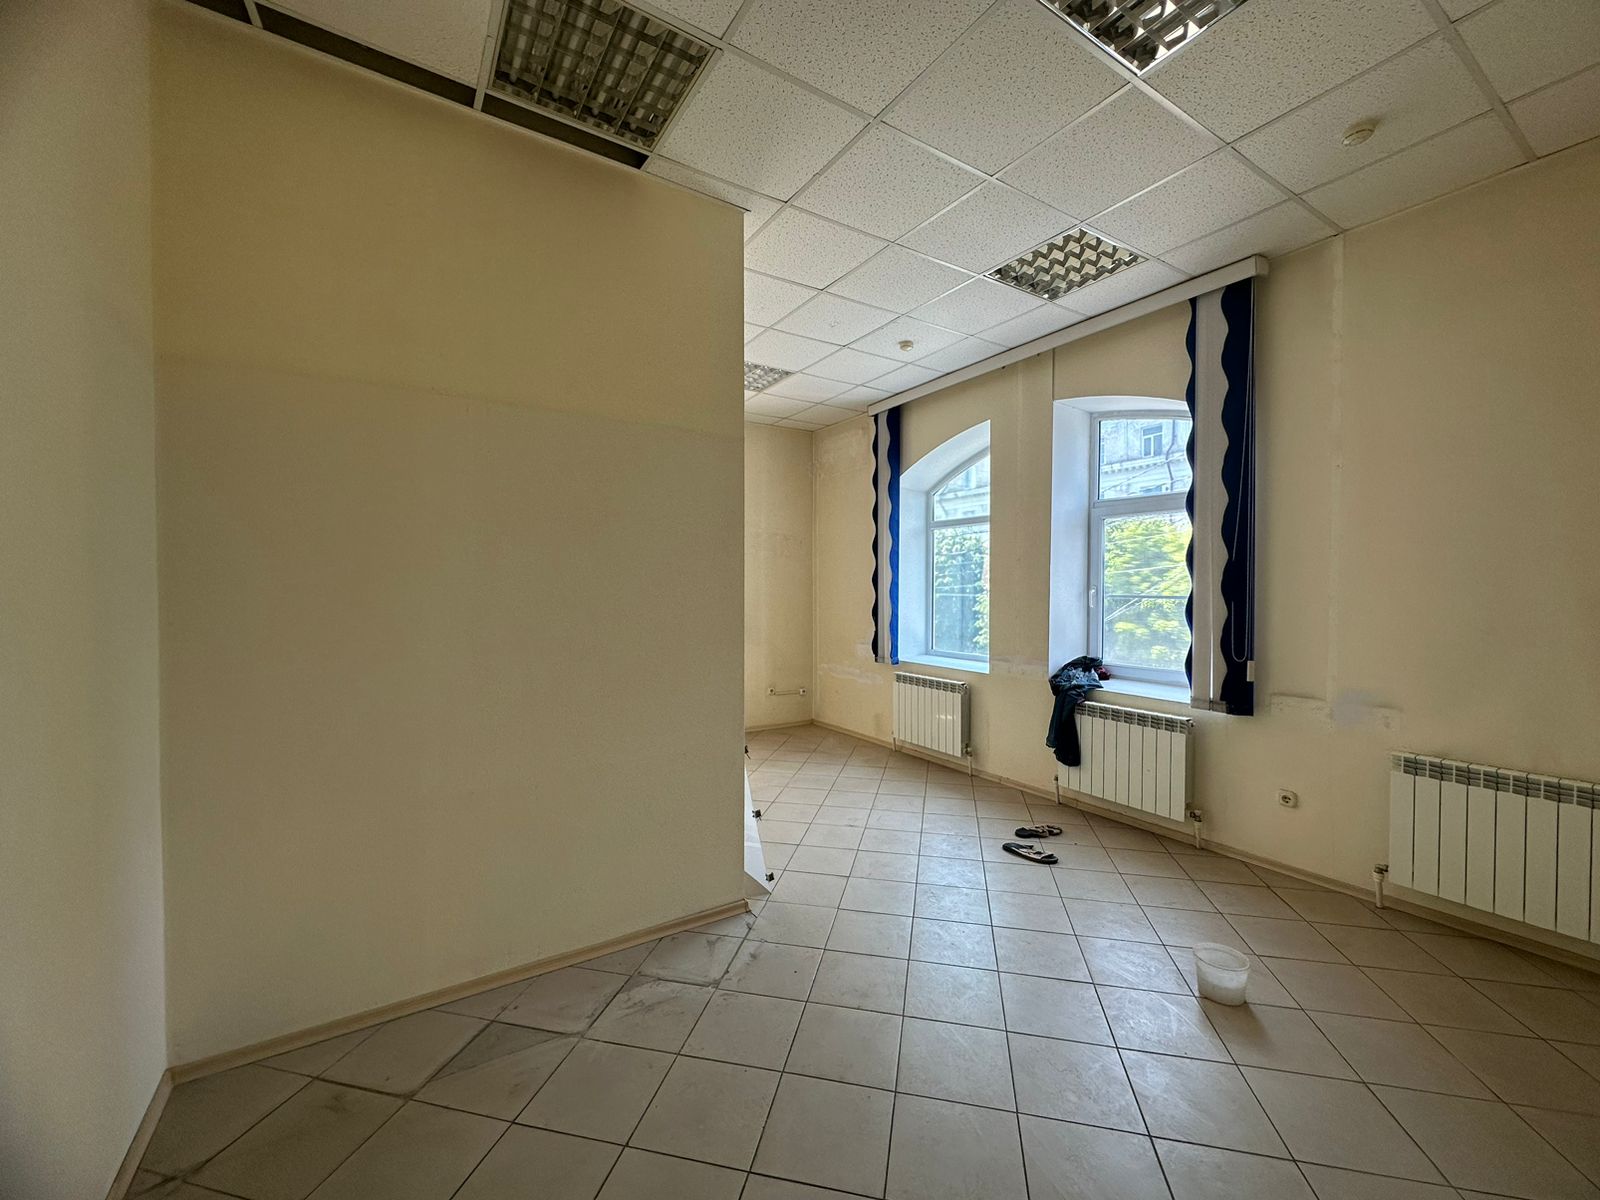 Предлагаем к аренде офисы на 2ом этаже по ул. Карла Маркса д.53, площадью от 7 м² до 70 м², общей площадью 140 м², напрямую от собственника._6